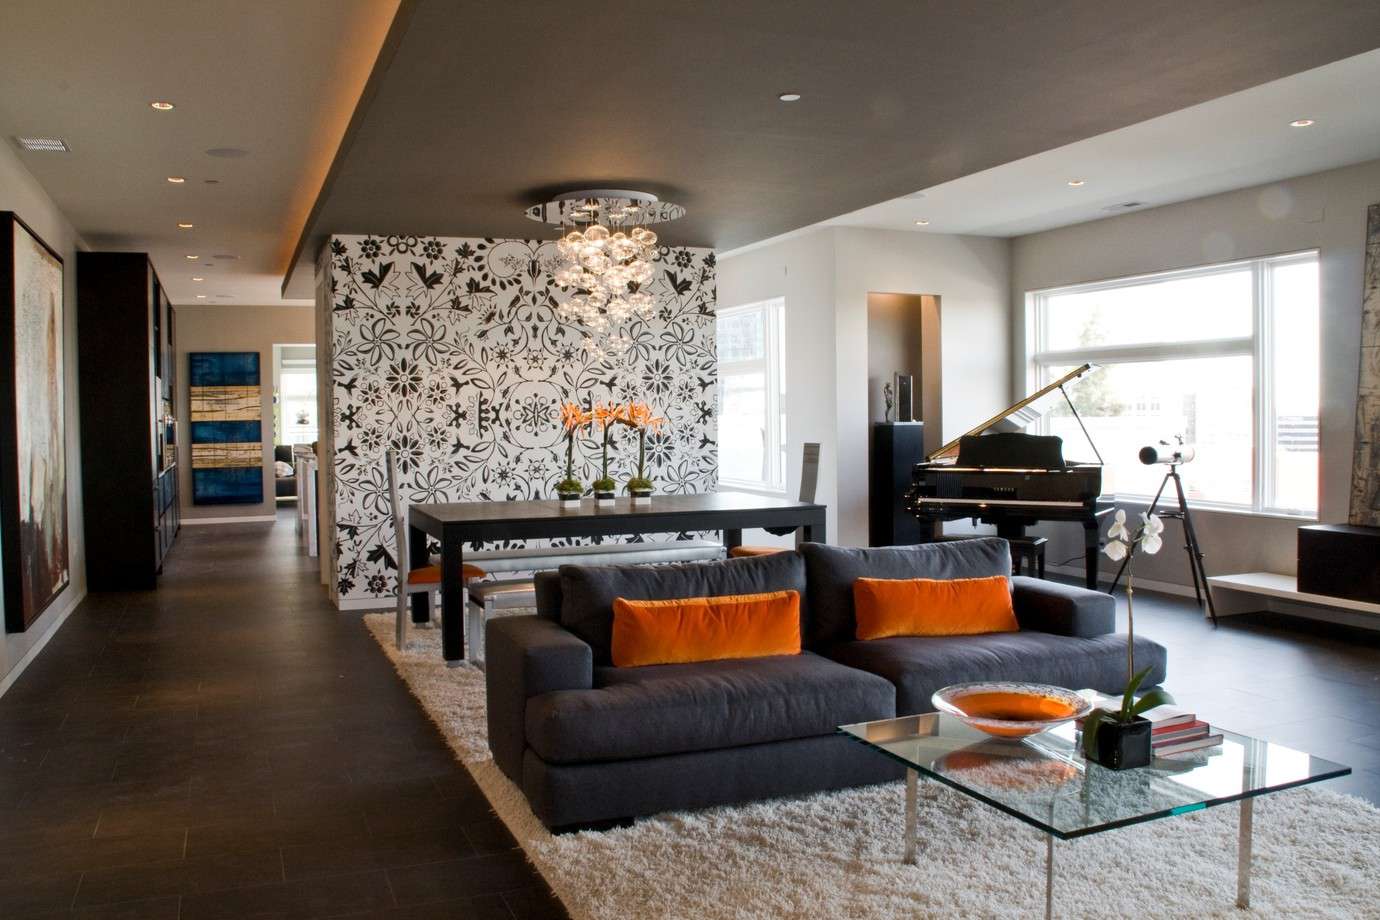 Habitación moderna con alfombra gruesa